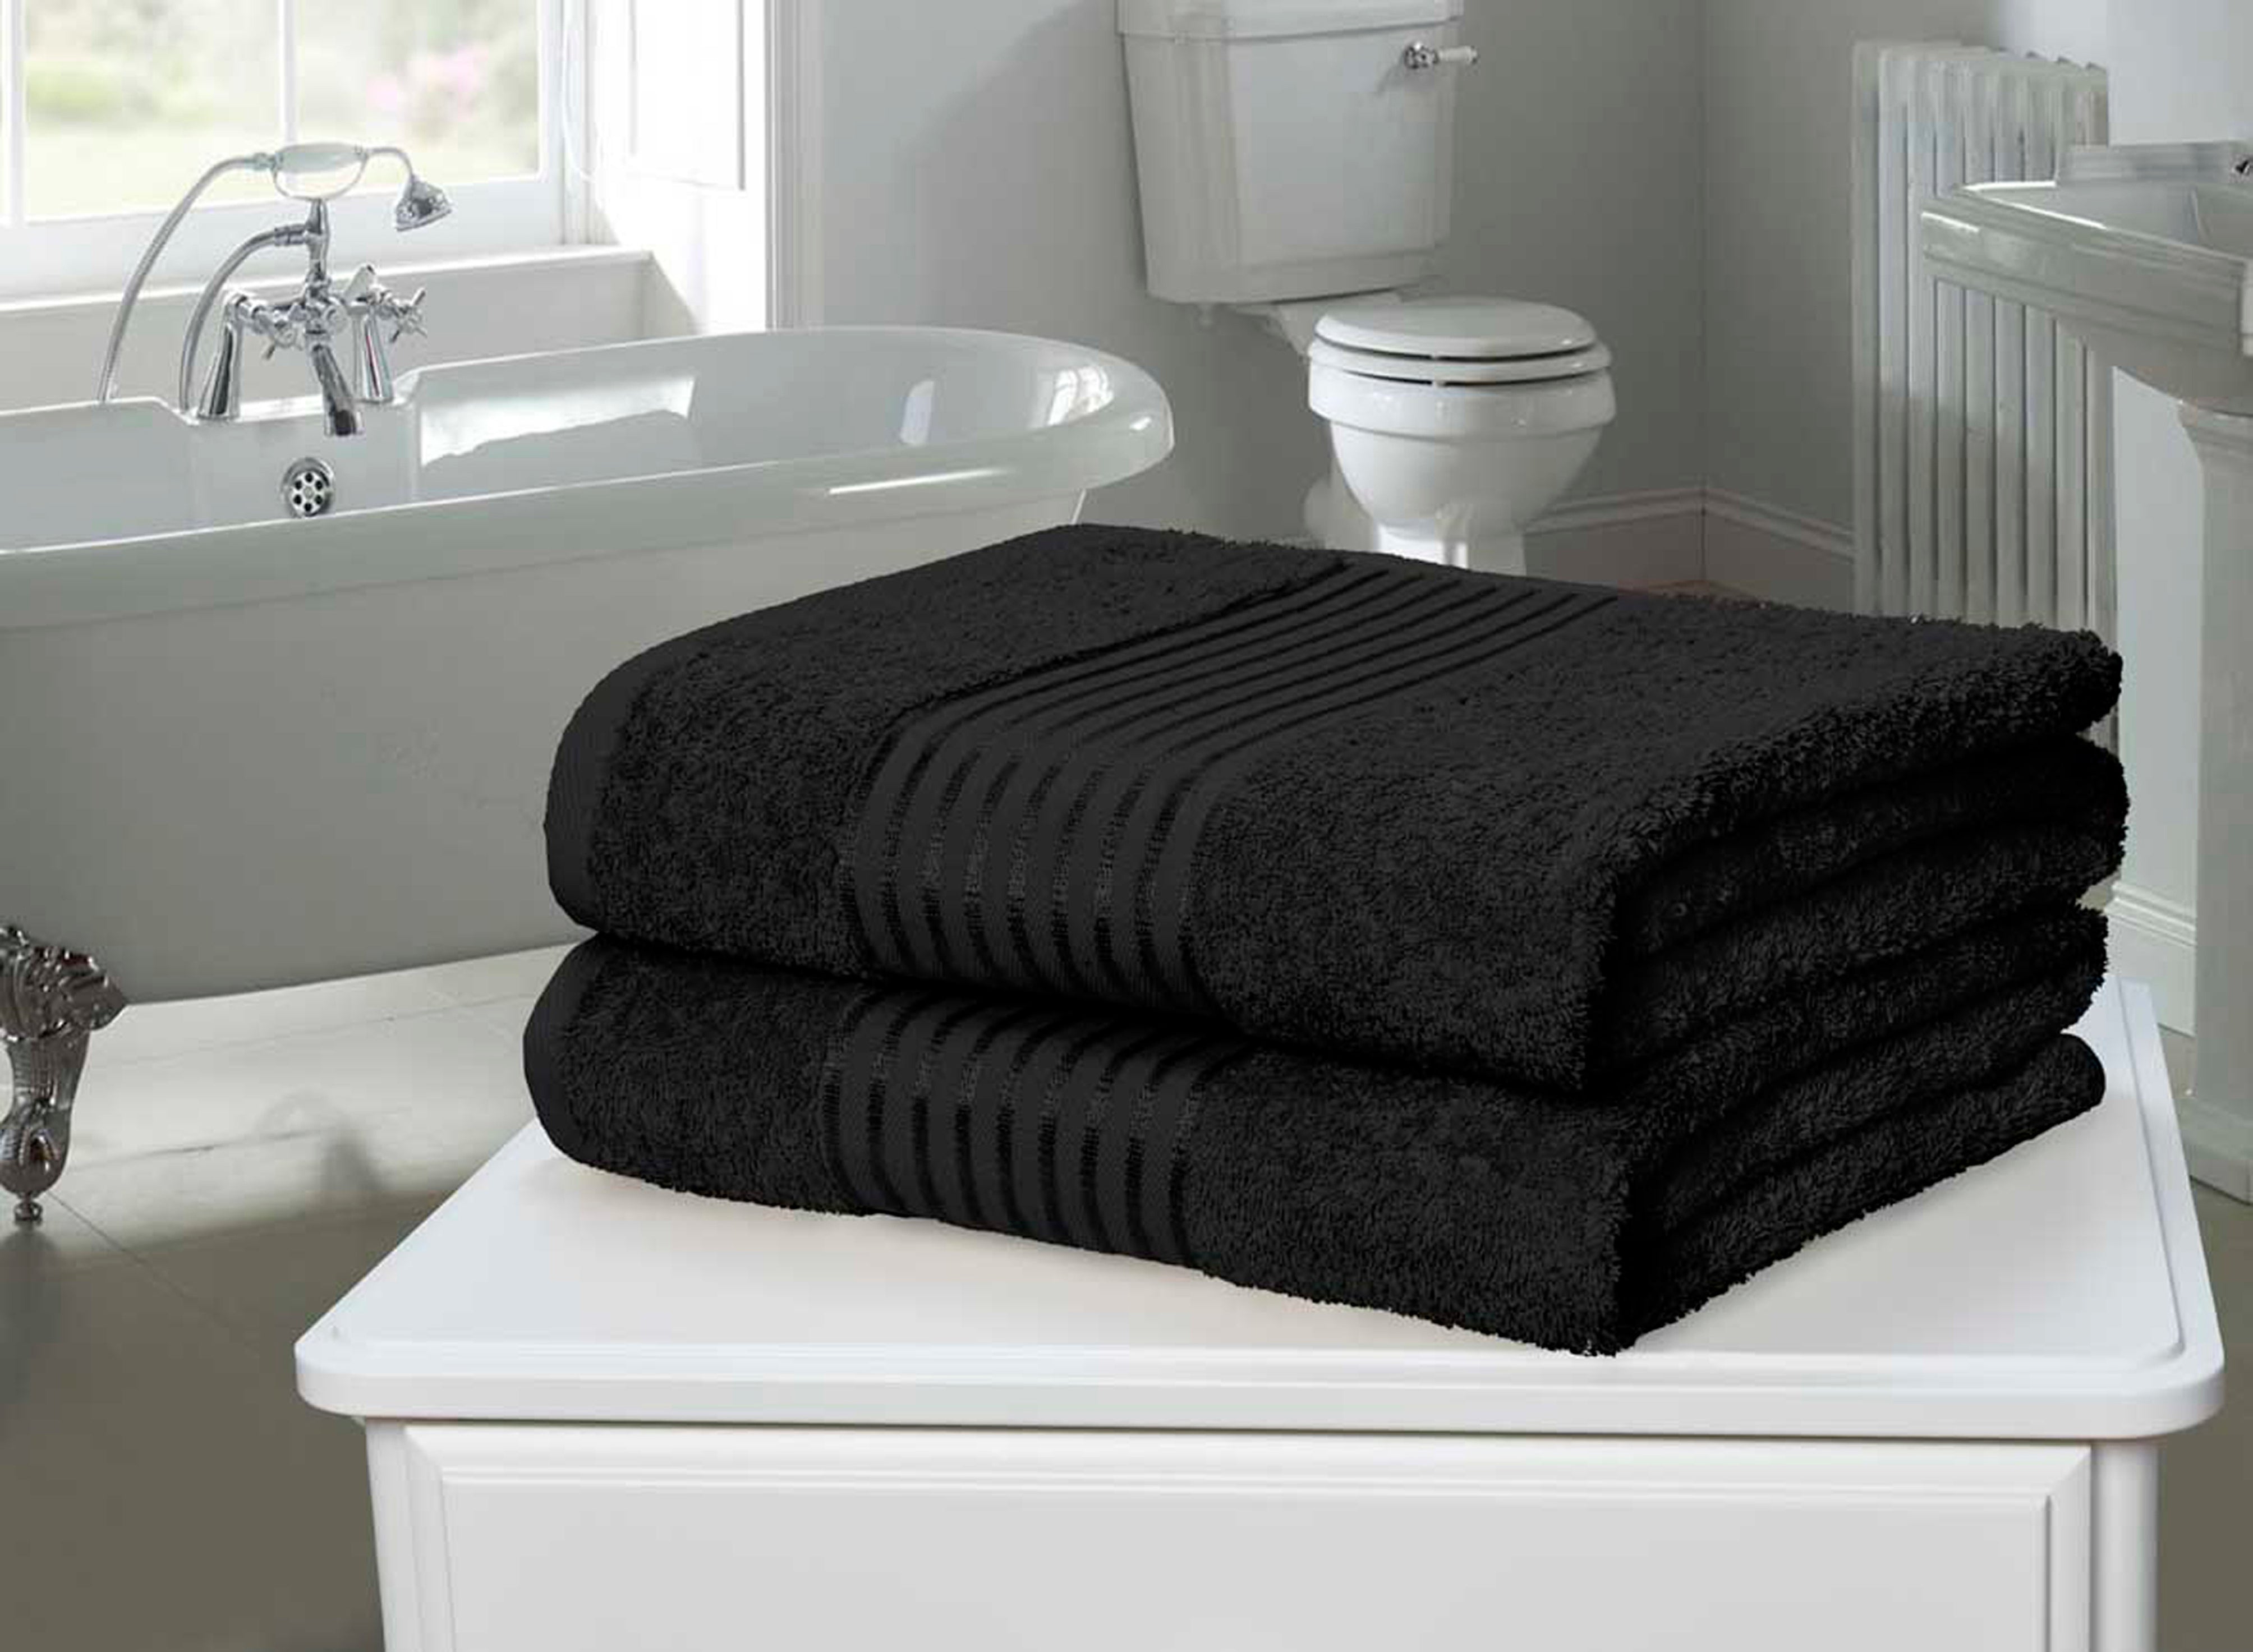 Windsor 2pc Bath sheets